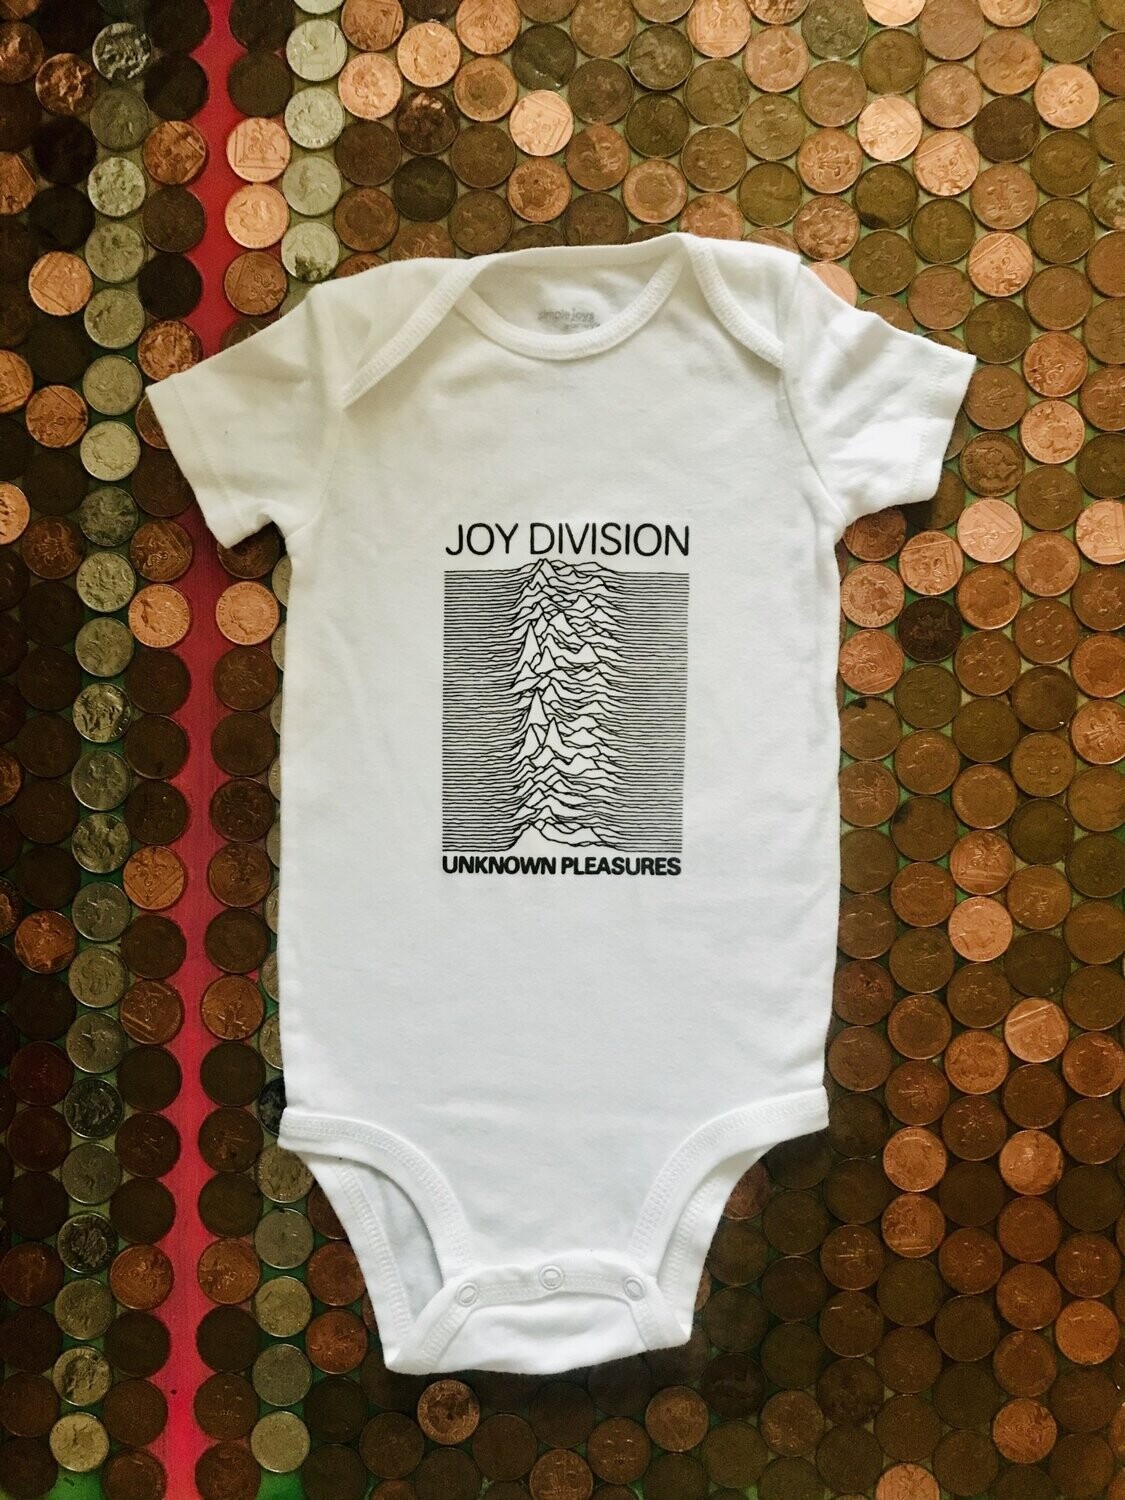 Joy Division baby grow